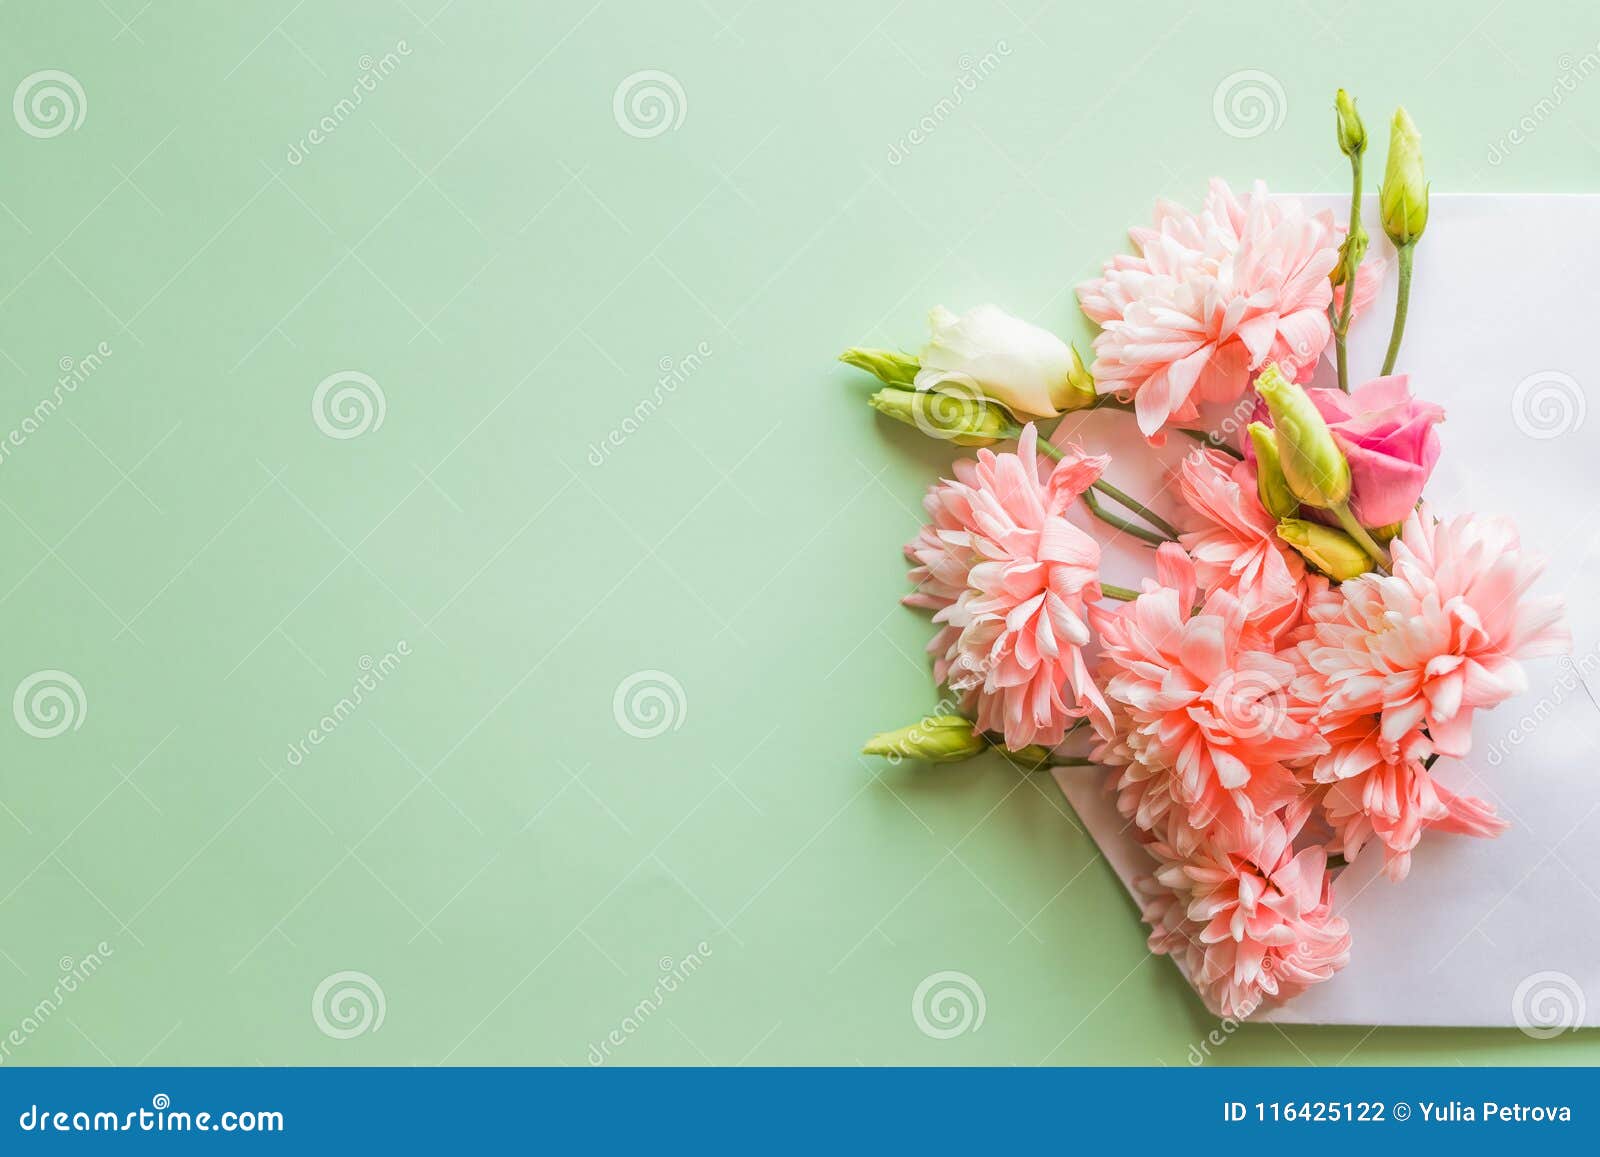 Opened Envelope Full of Blossom Pink Chrysanthemums, Flowers on Soft ...